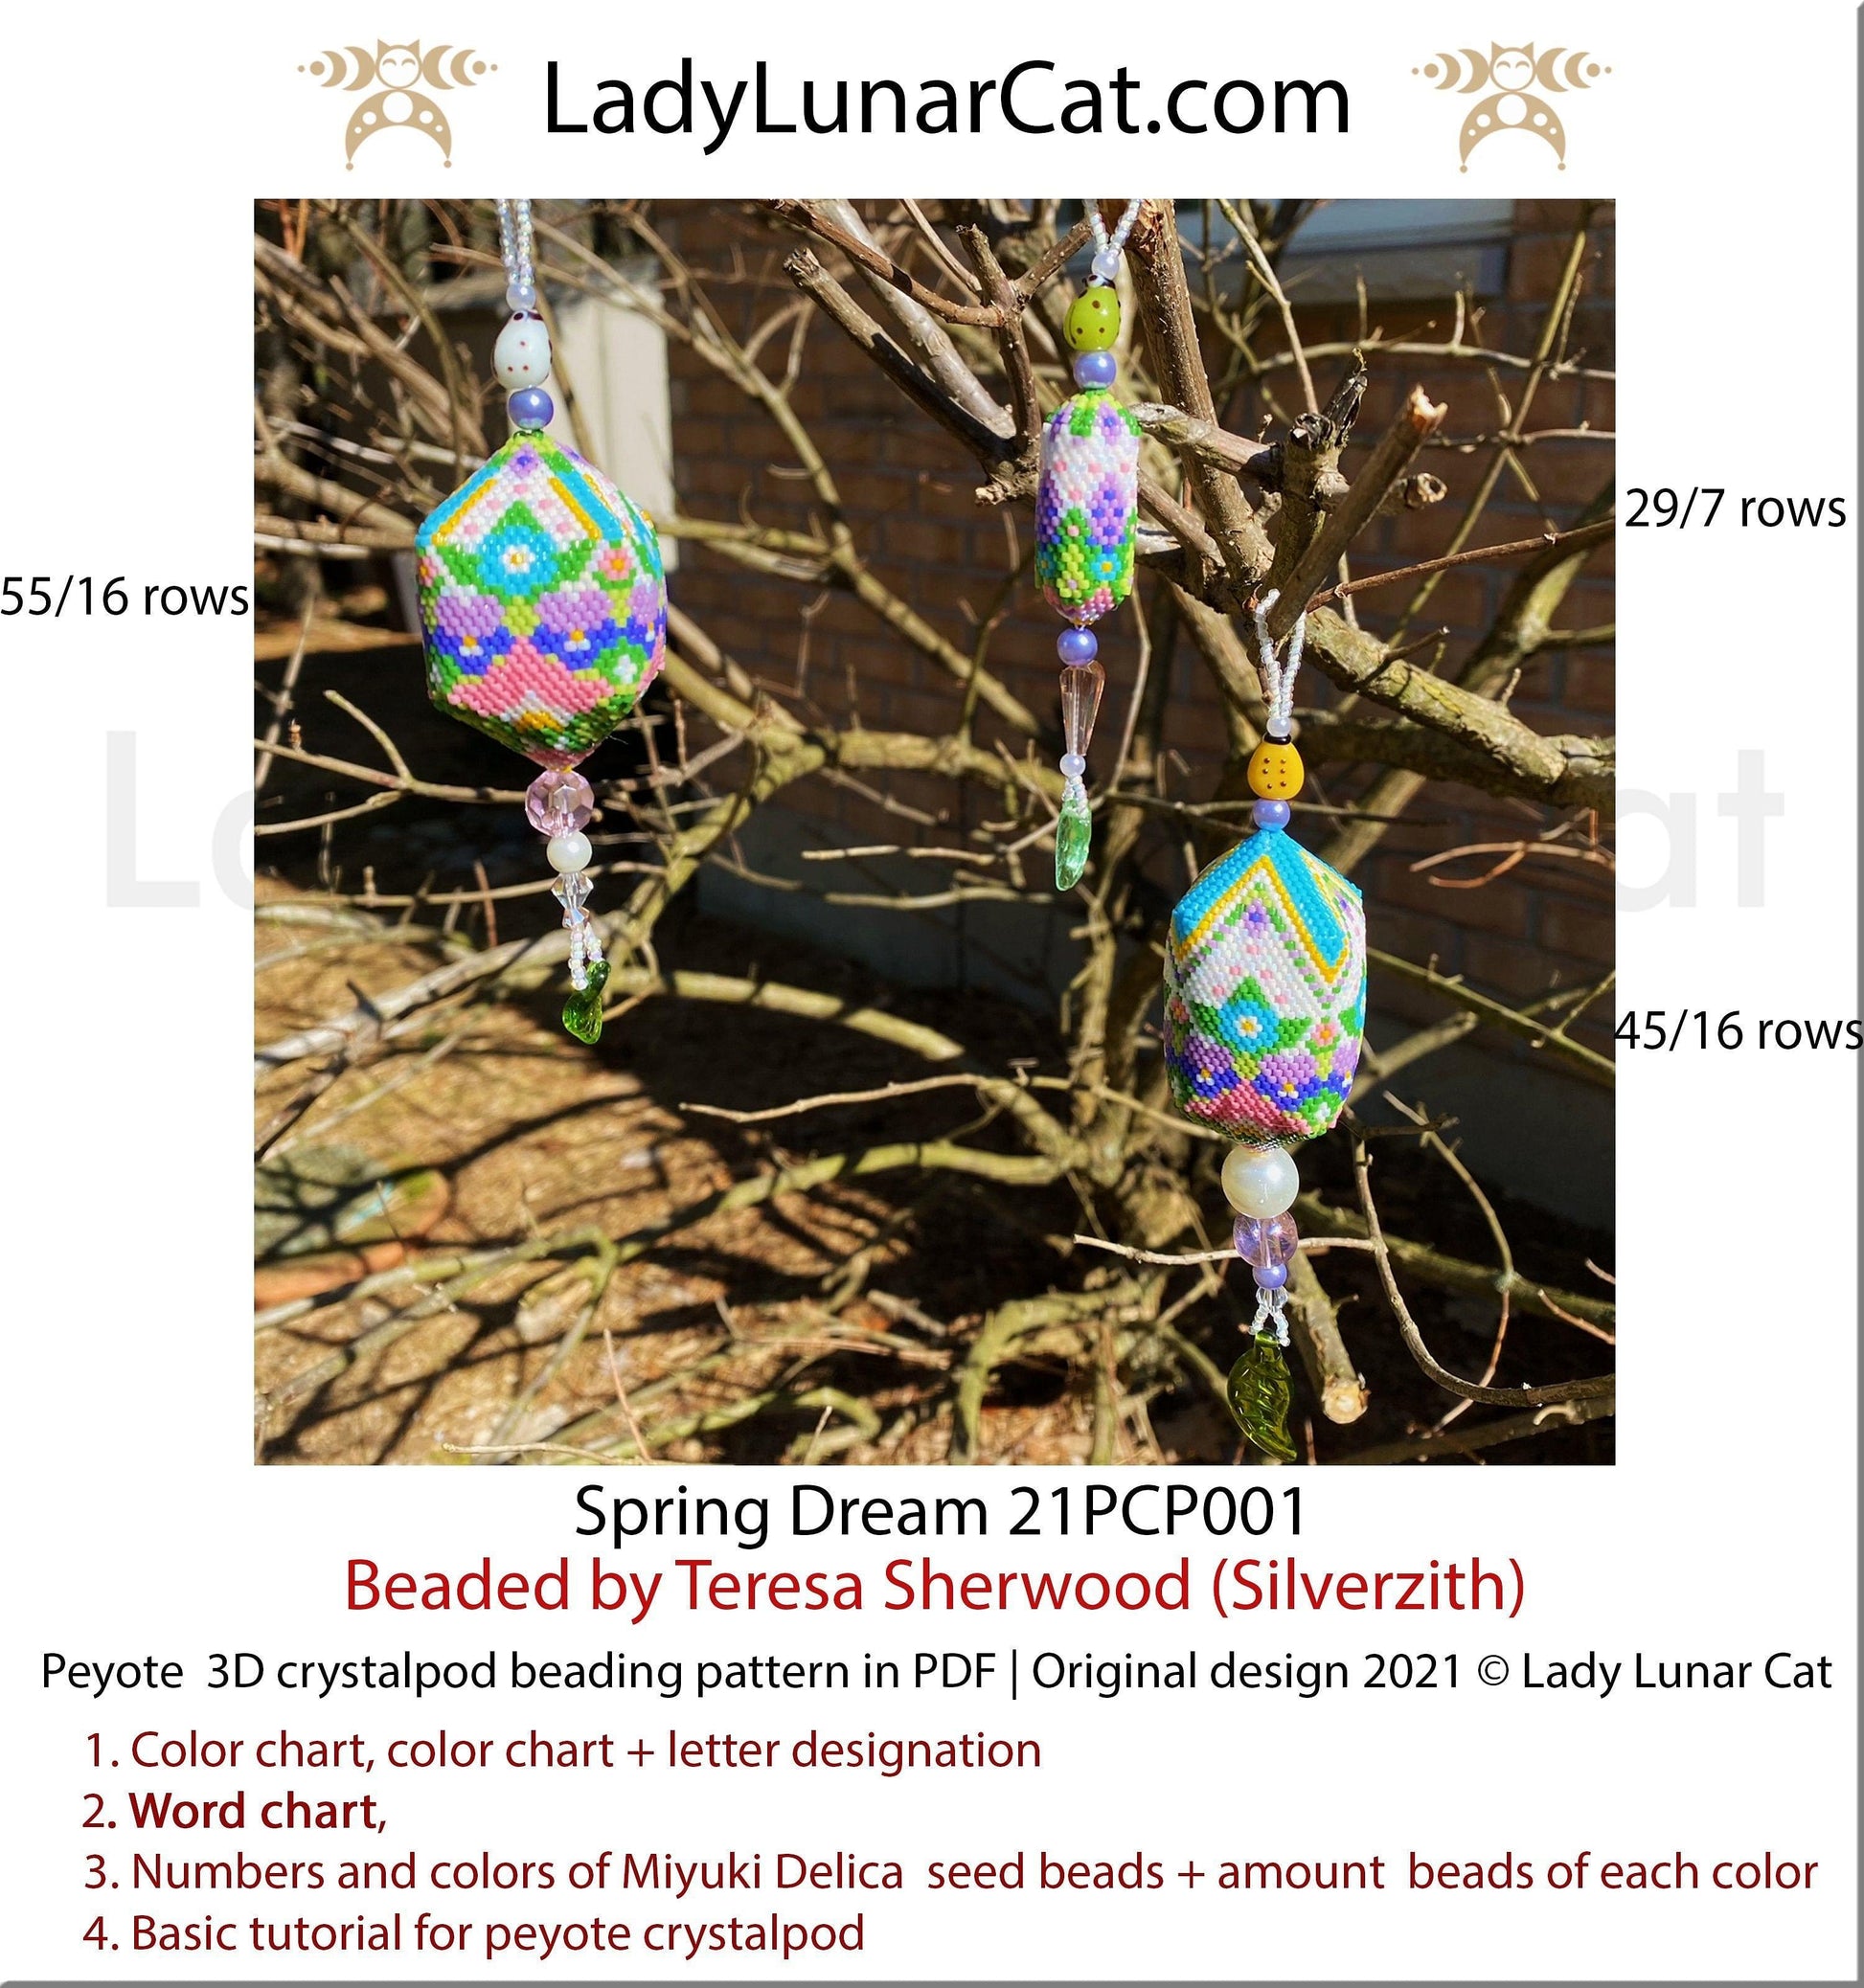 3d peyote pod pattern or crystalpod pattern for beading  Spring Dream 21PCP001 LadyLunarCat